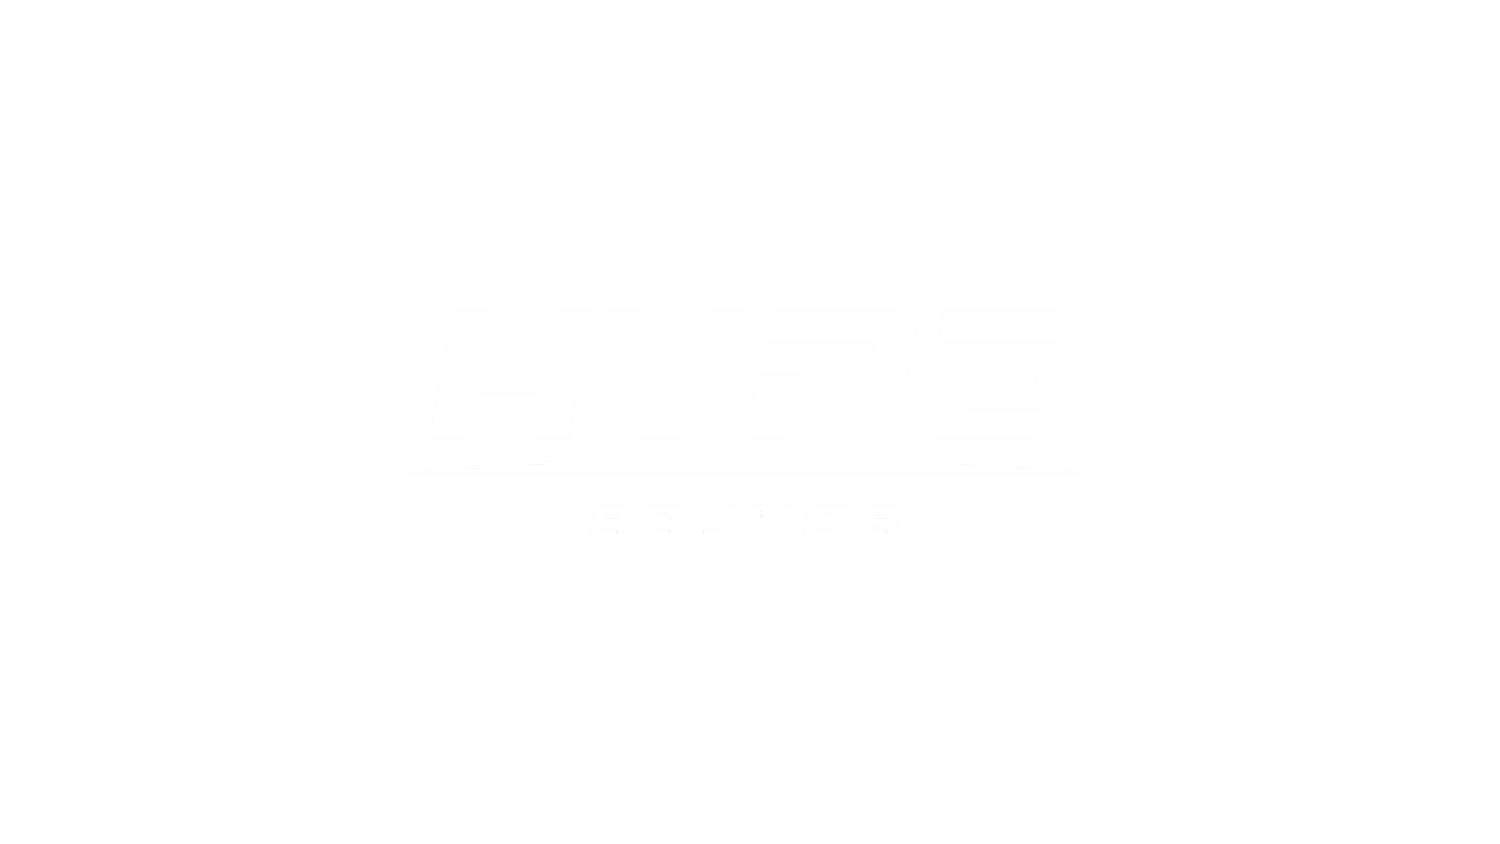 Hype Sounds